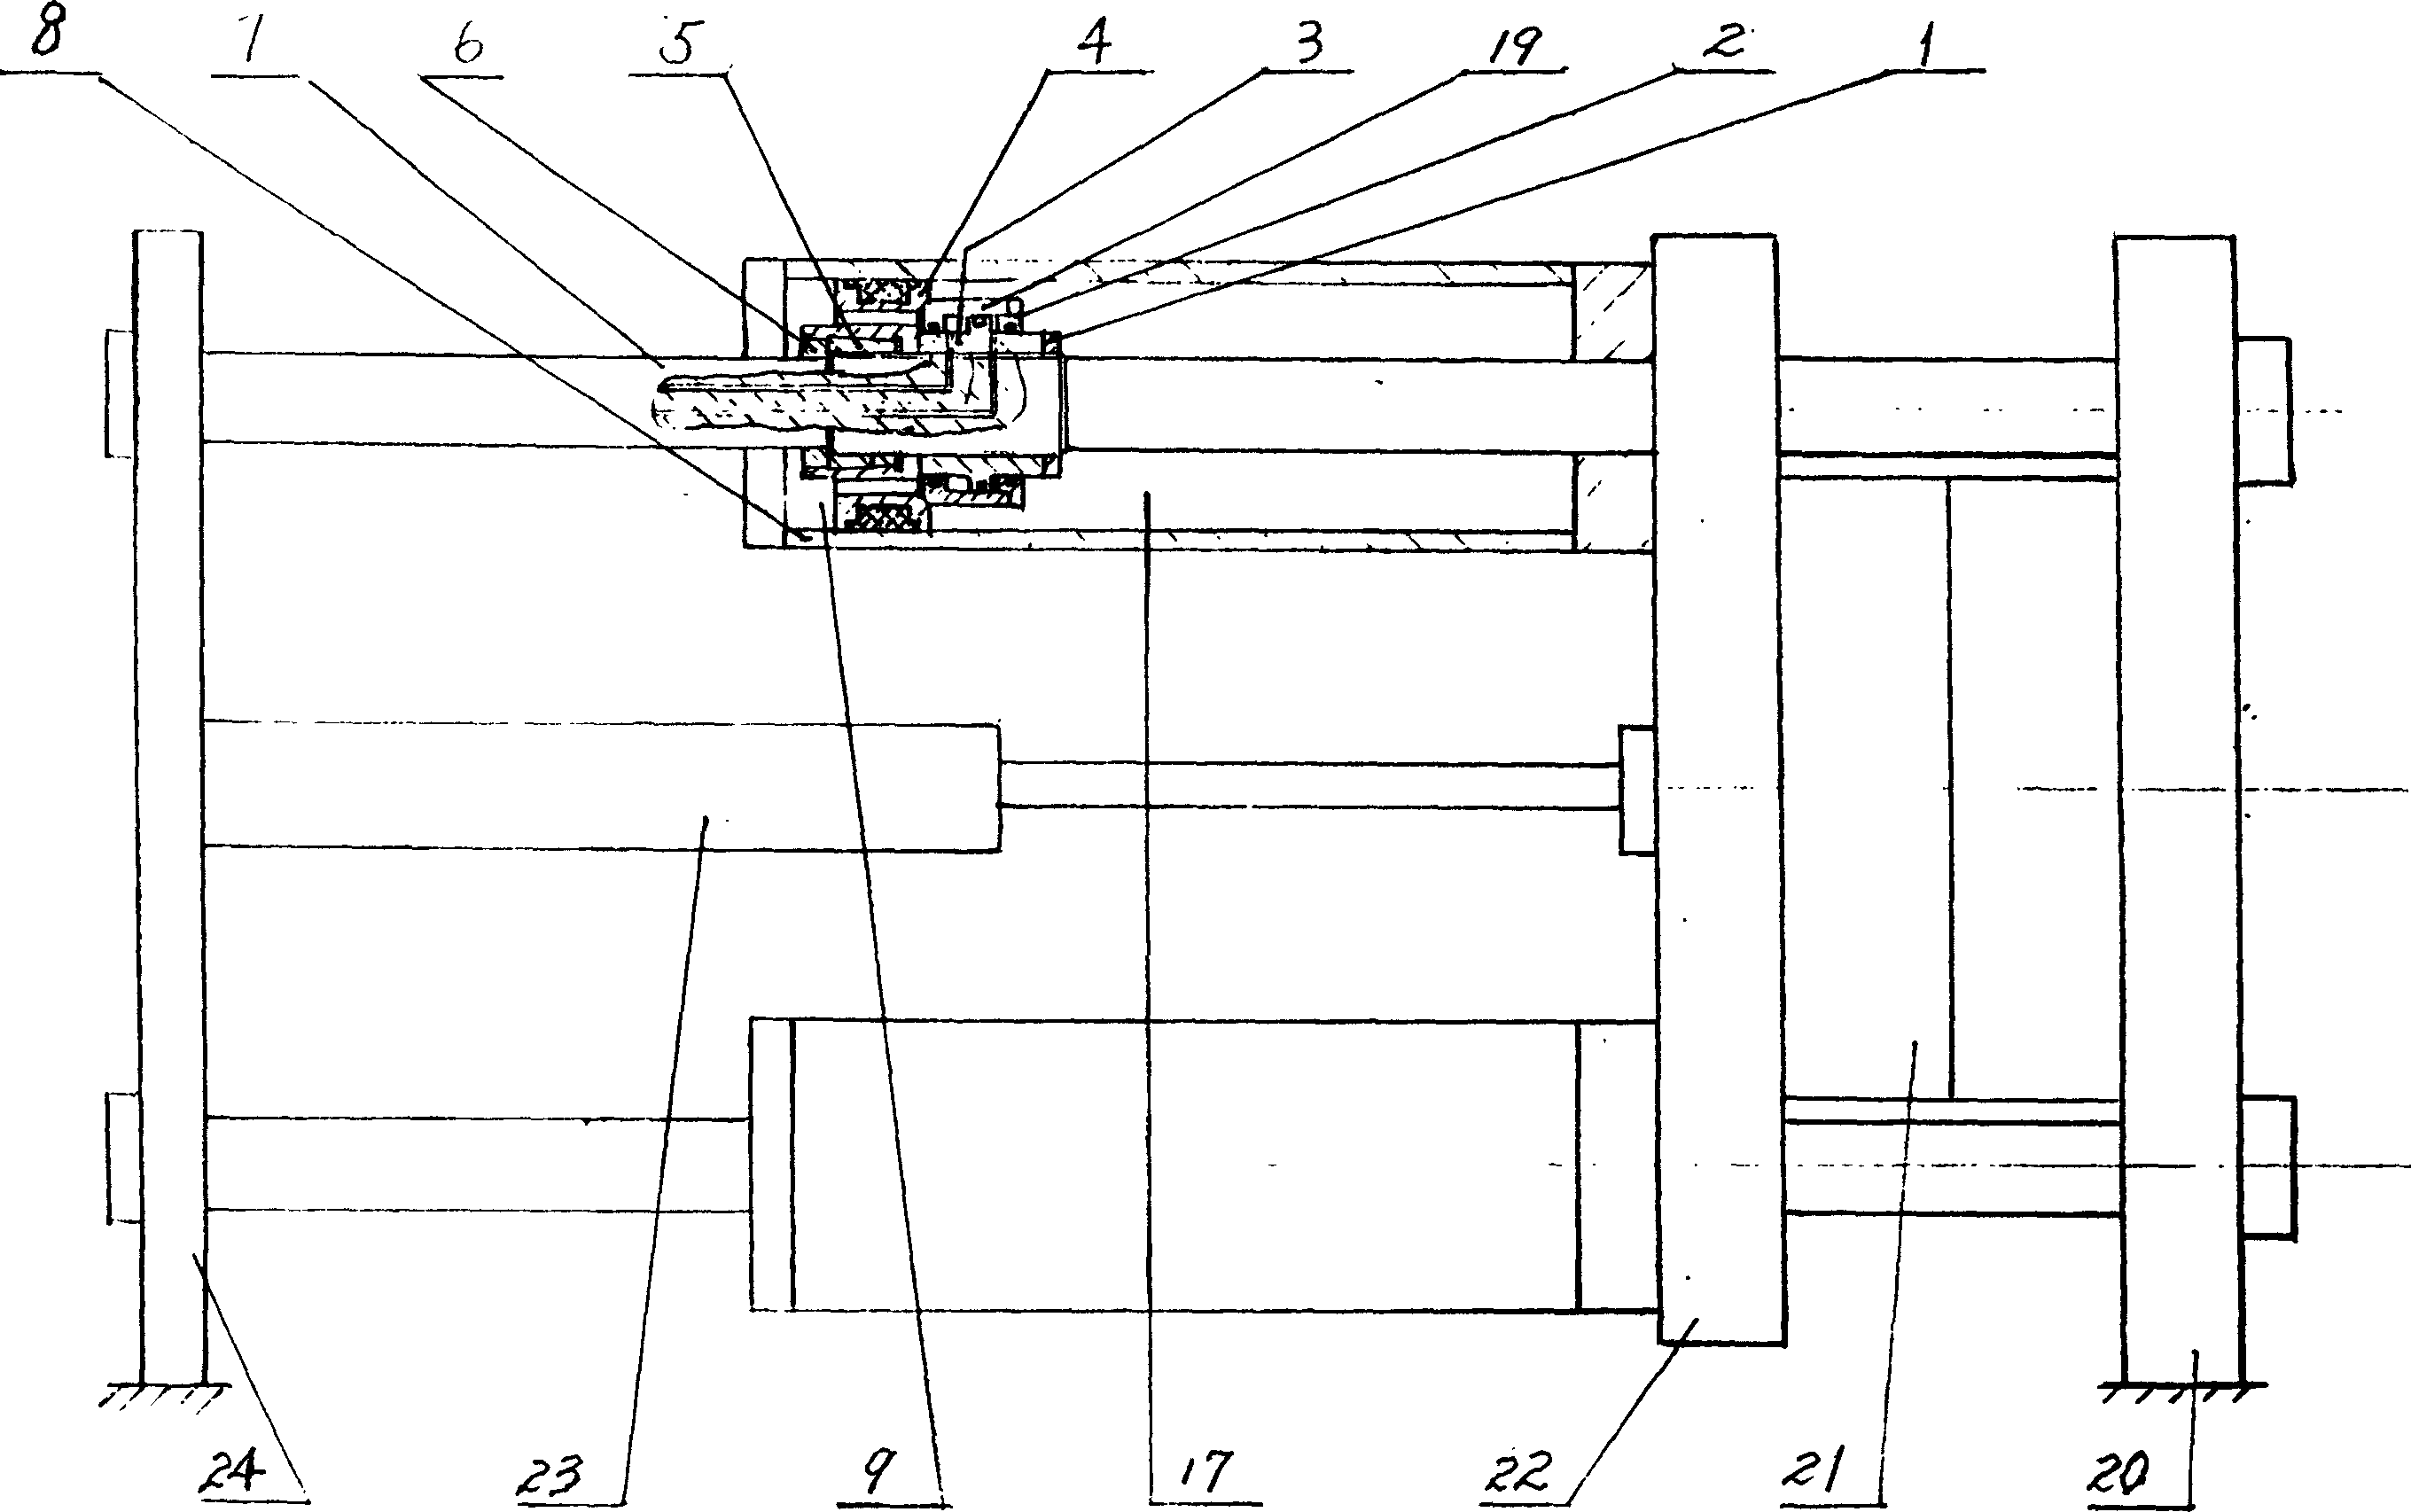 Internal circulation oil cylinder having built in logic valve